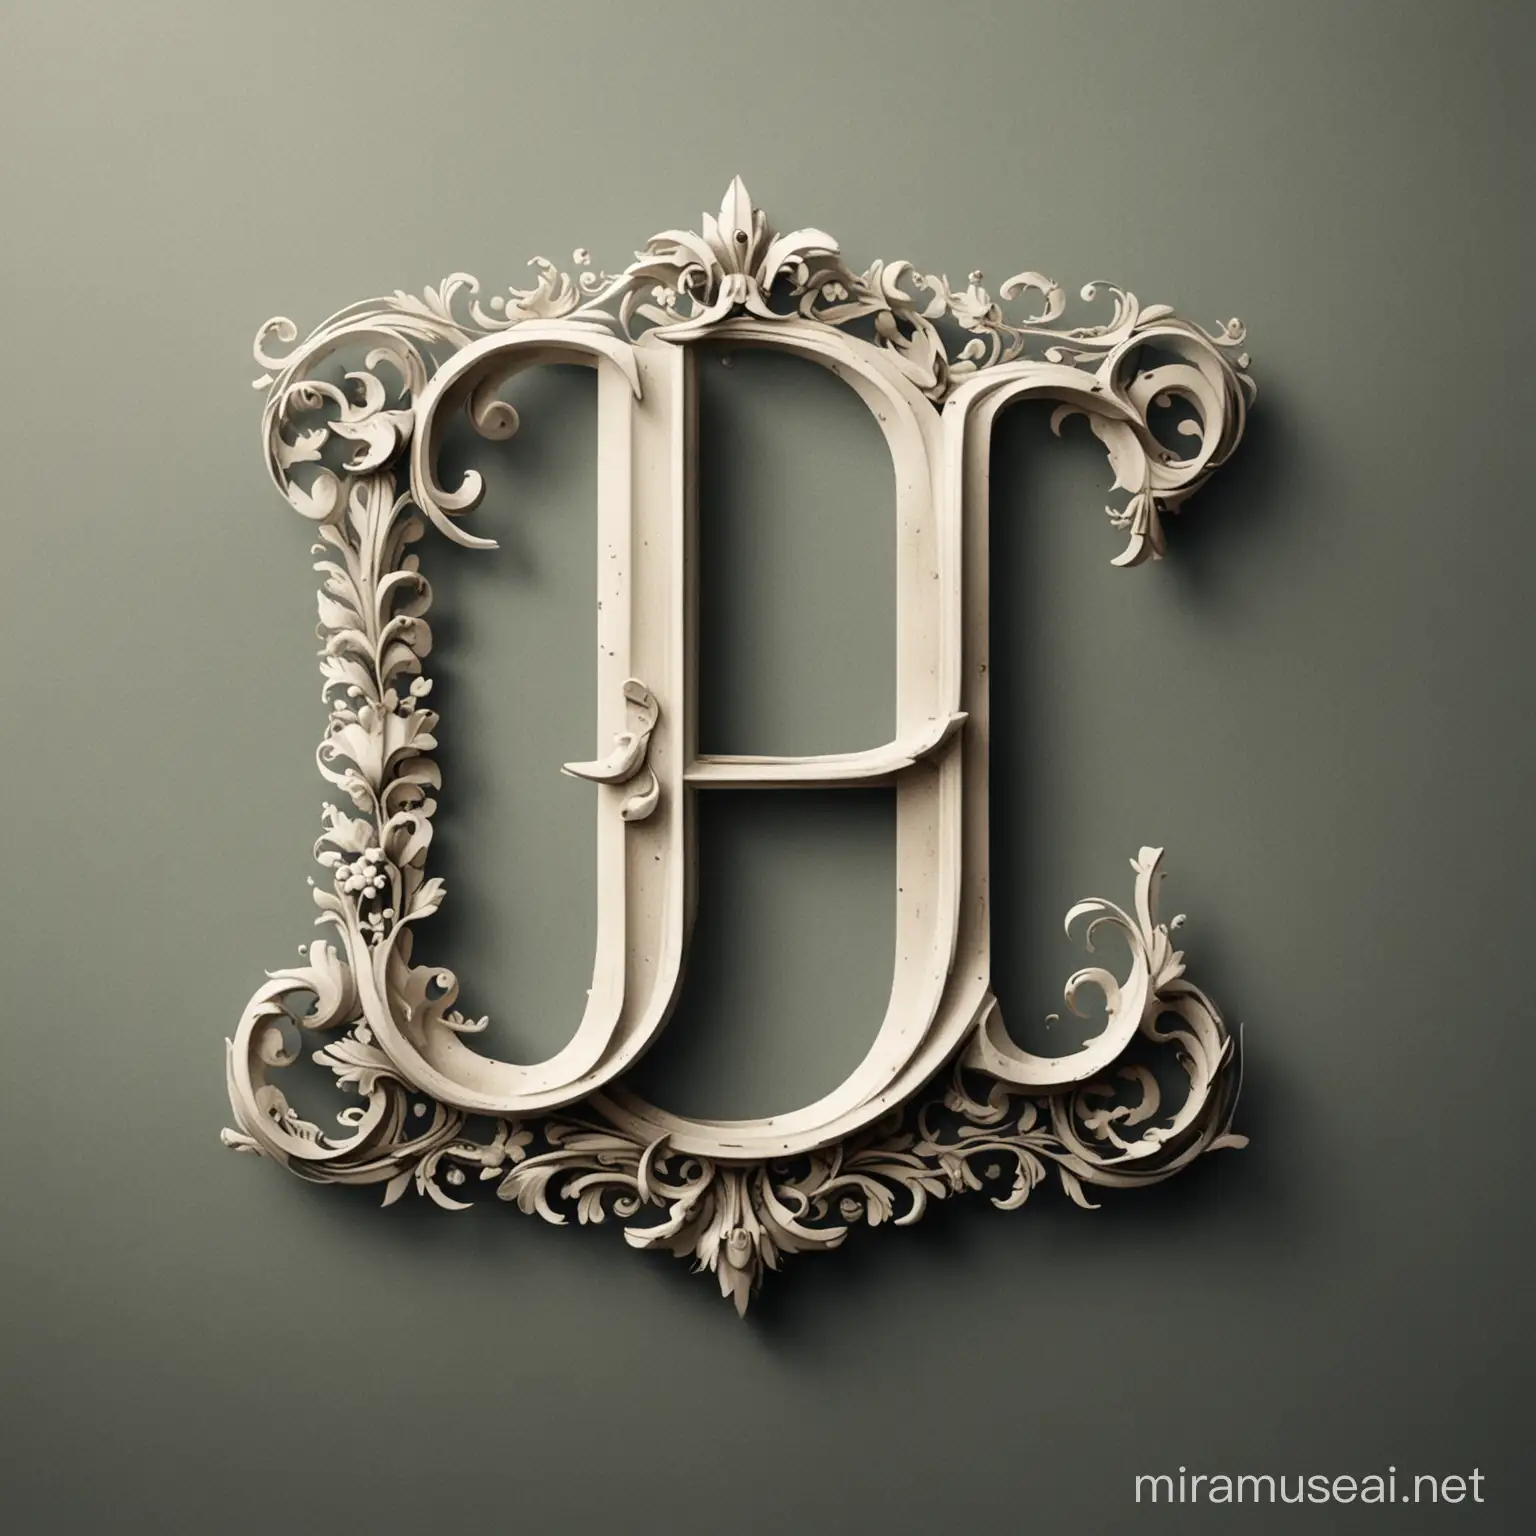 Elegant Monogram Design with Letters J and E